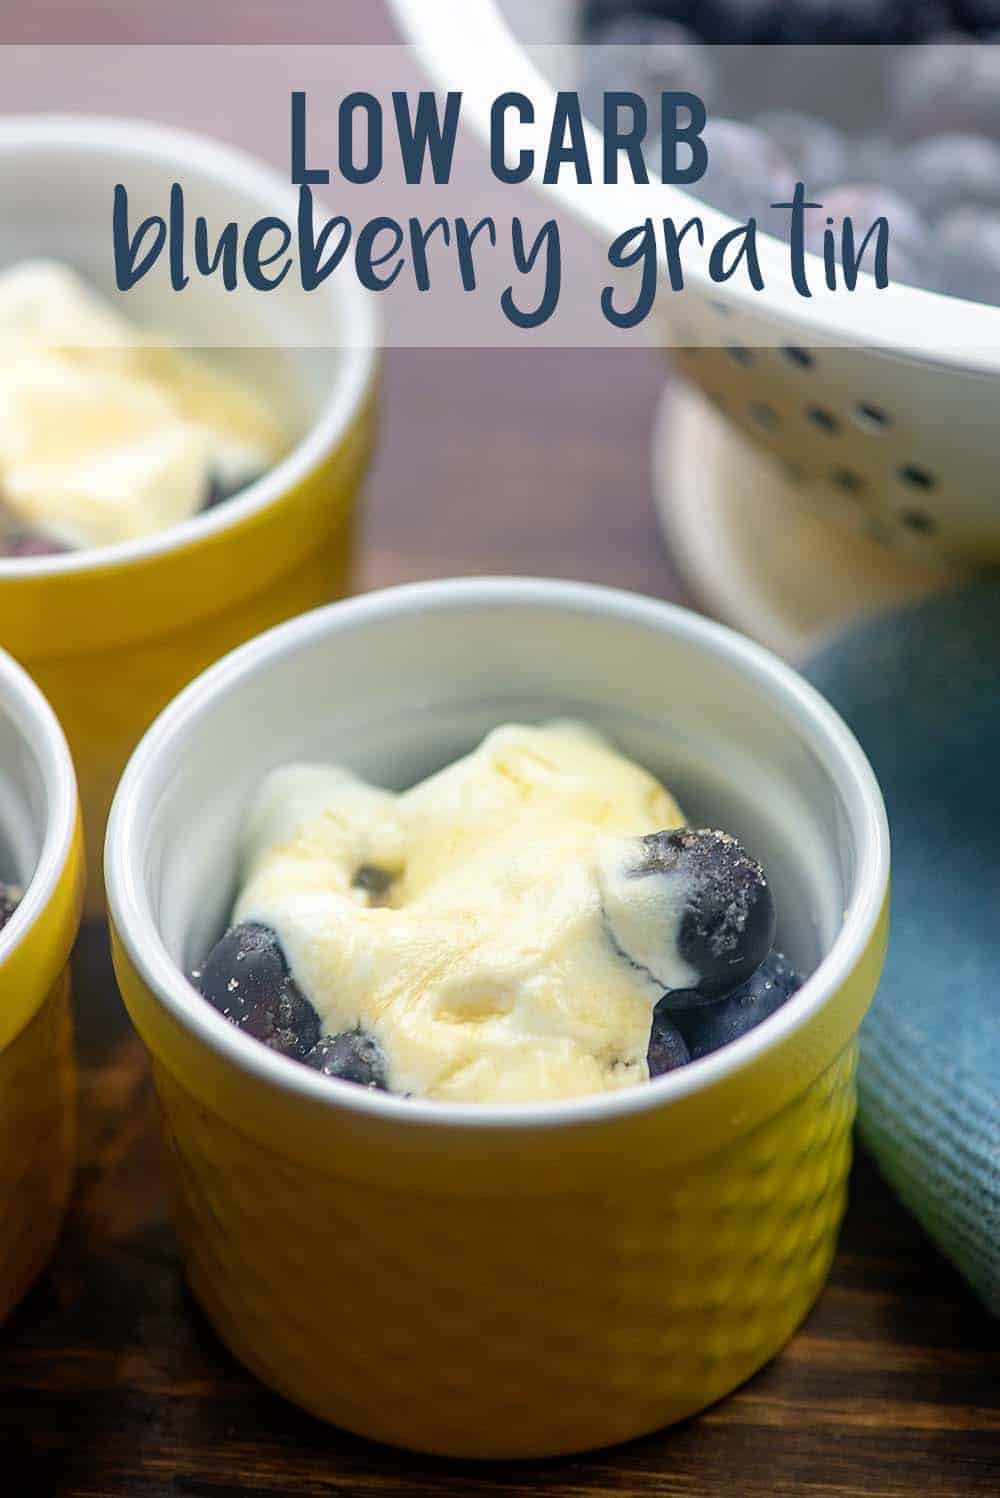 Blueberry gratin recipe